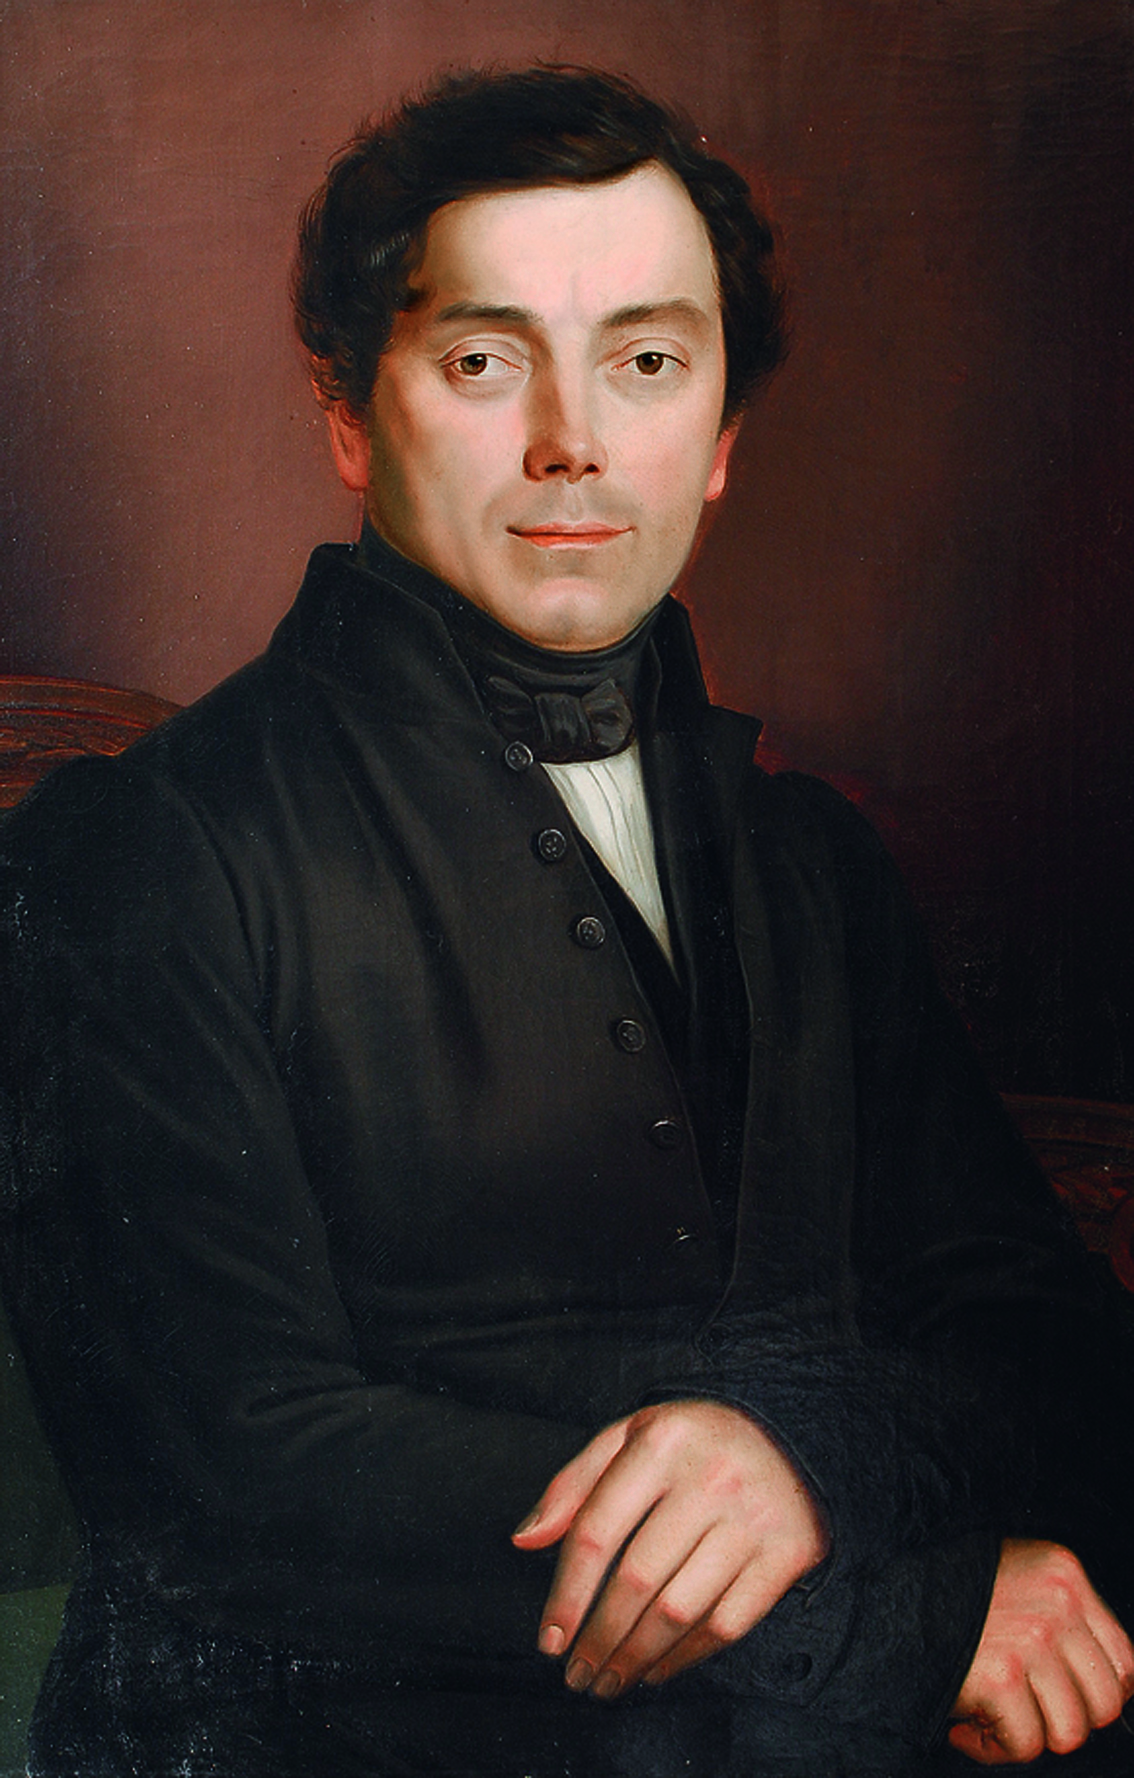 A portrait of a gentleman